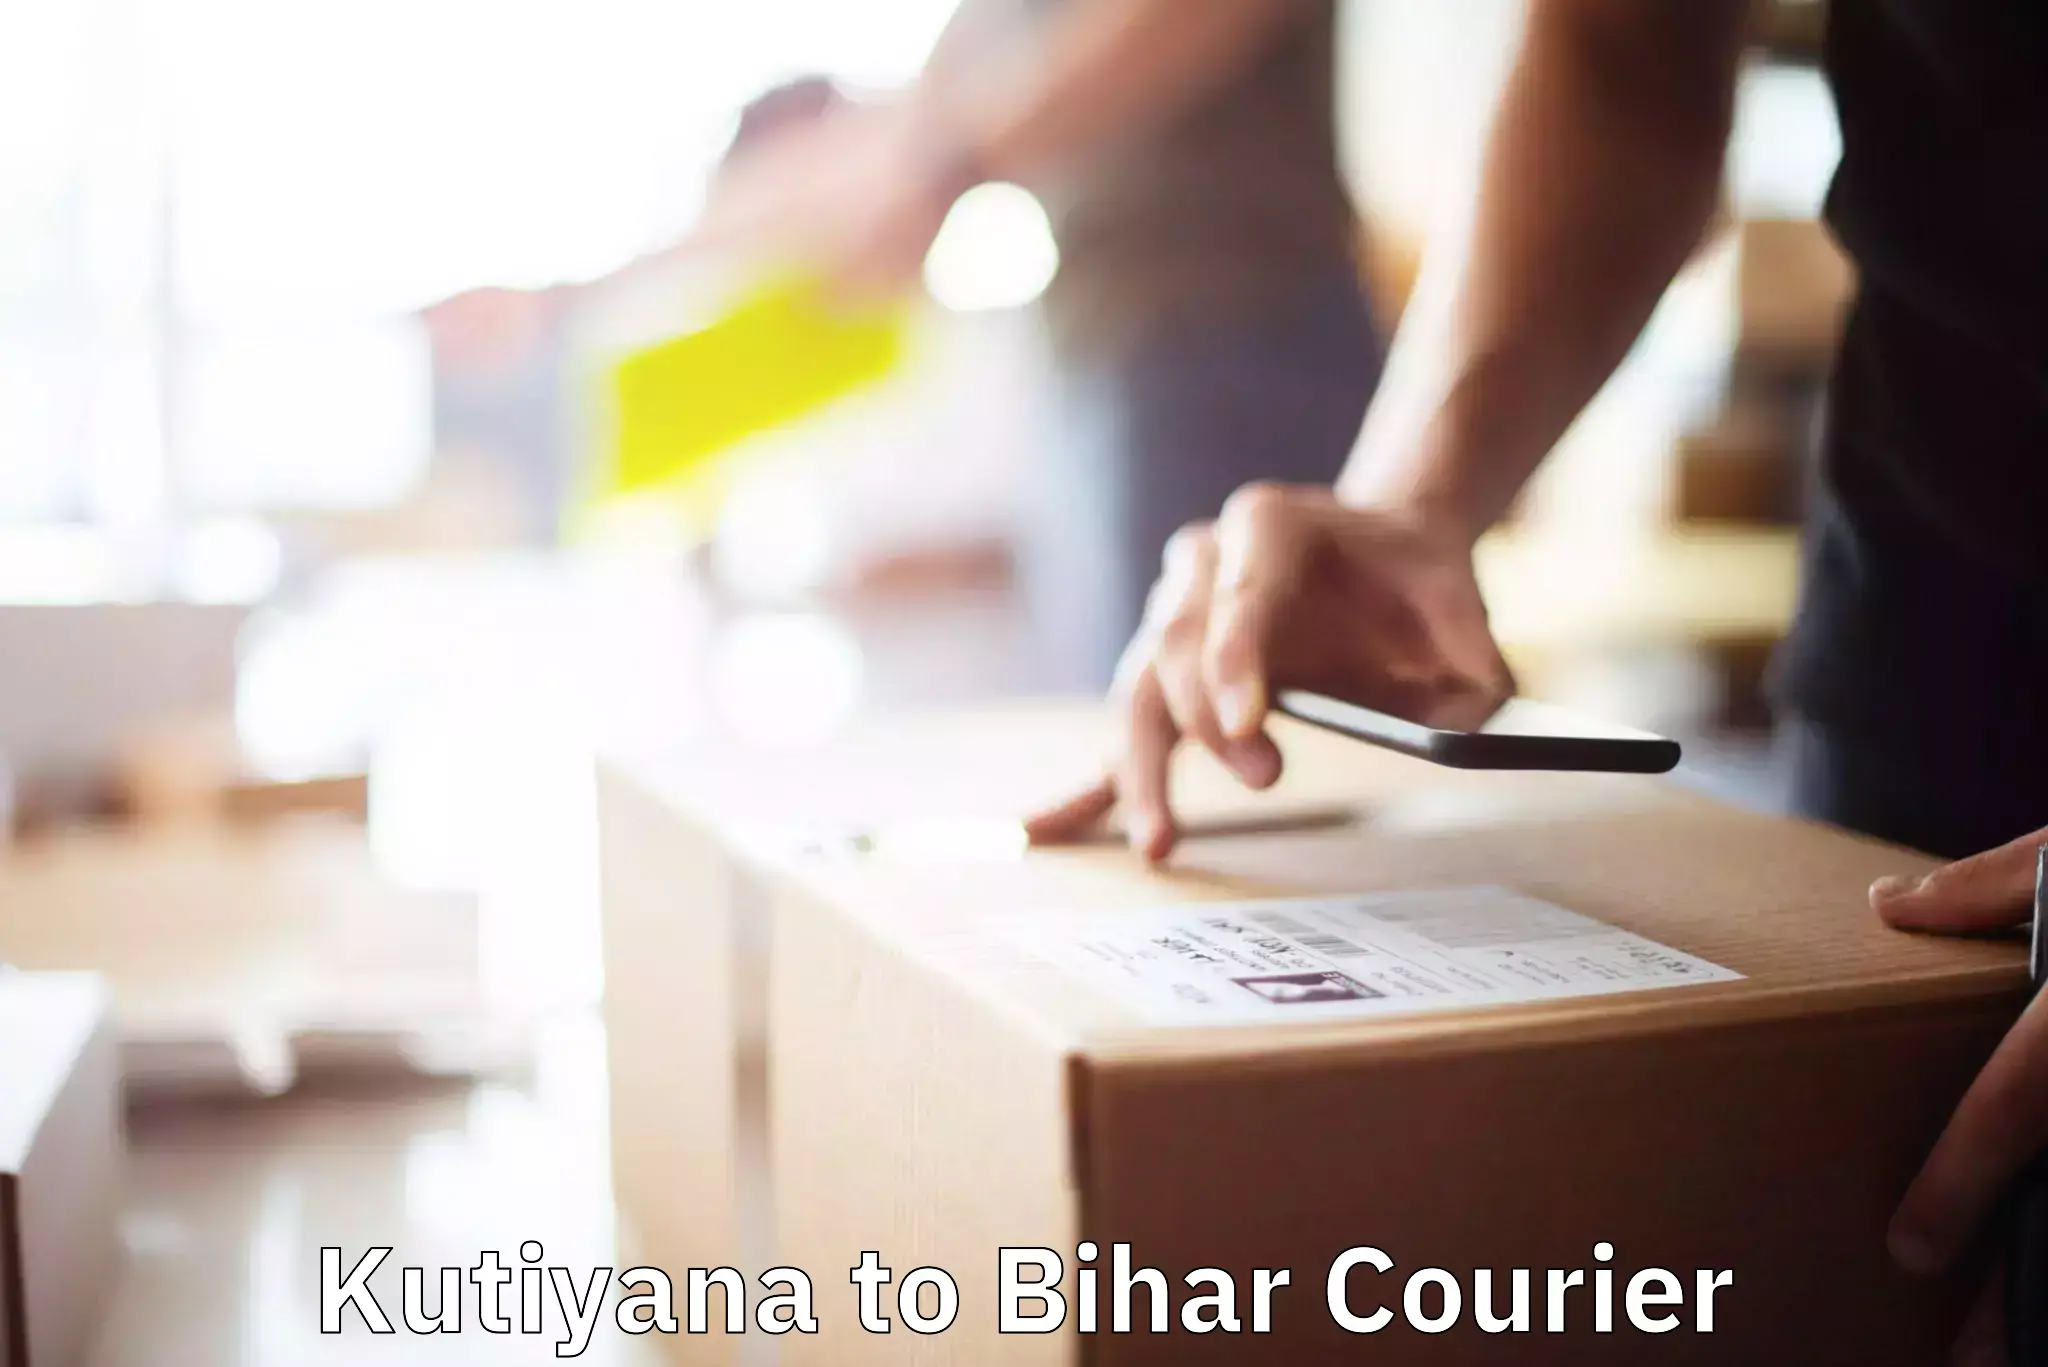 Furniture delivery service Kutiyana to Dhaka